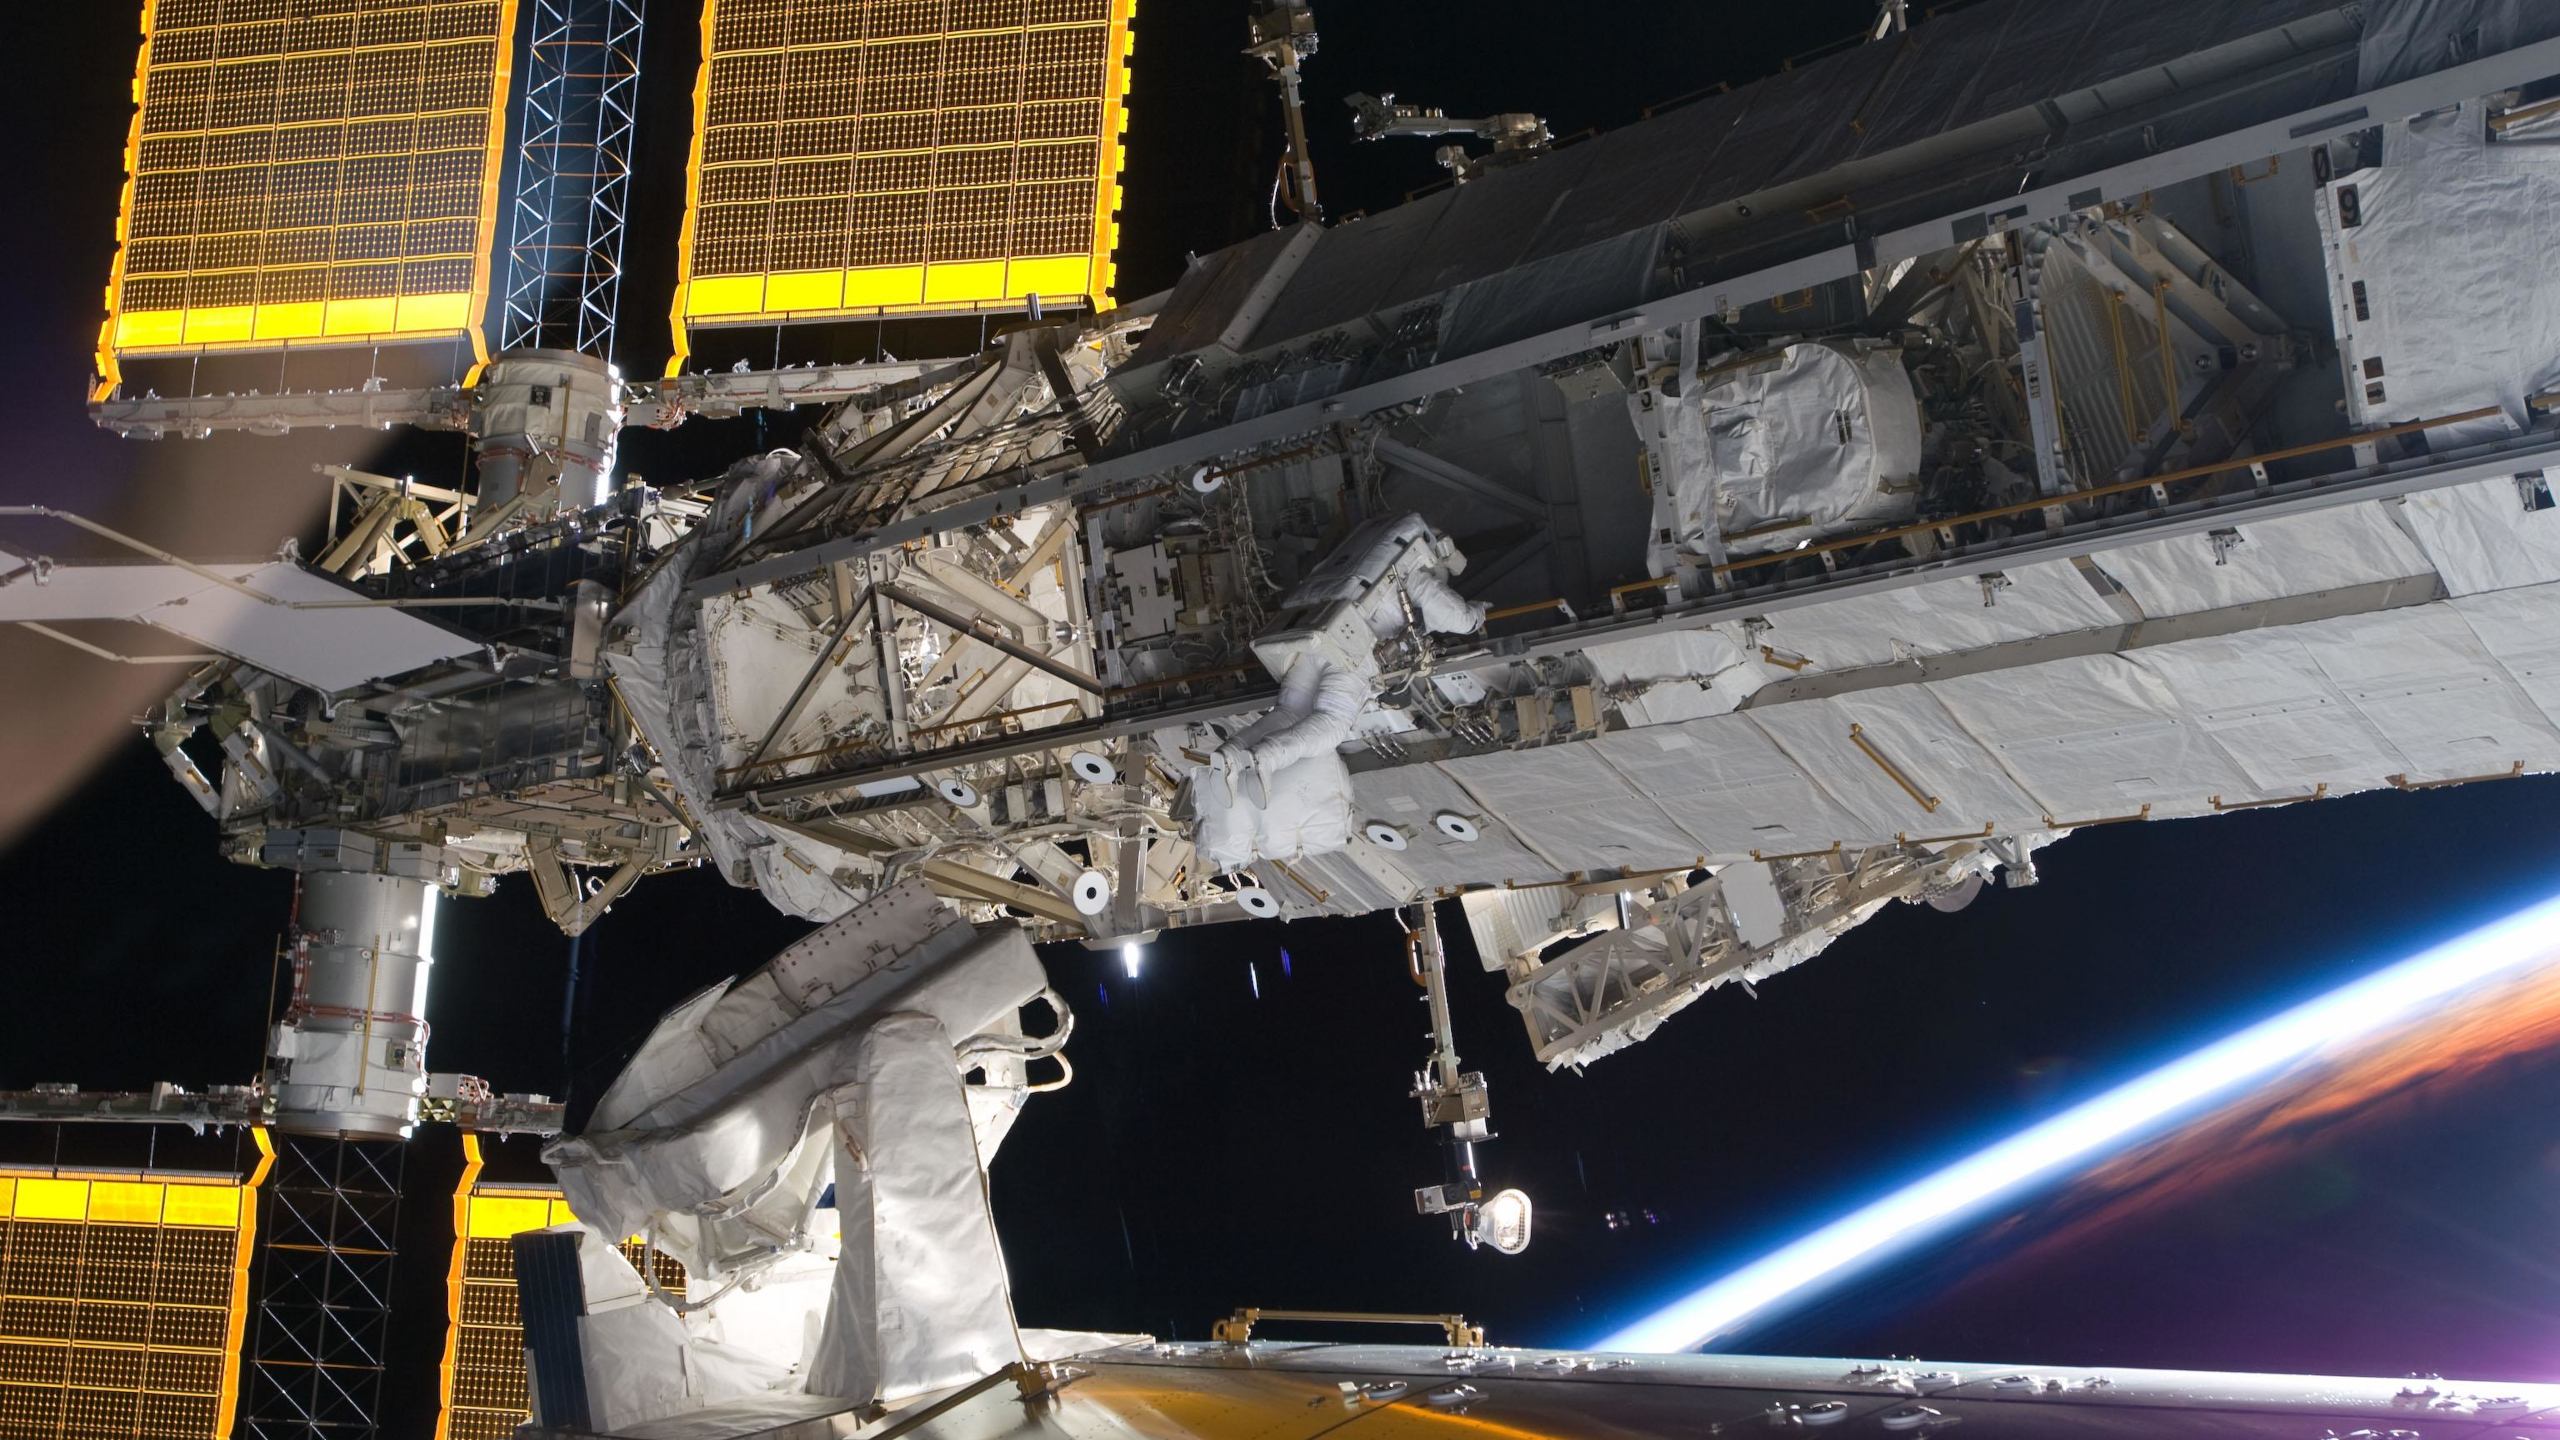 General 2560x1440 International Space Station NASA space Orbital Stations technology astronaut Earth solar panel orbital view